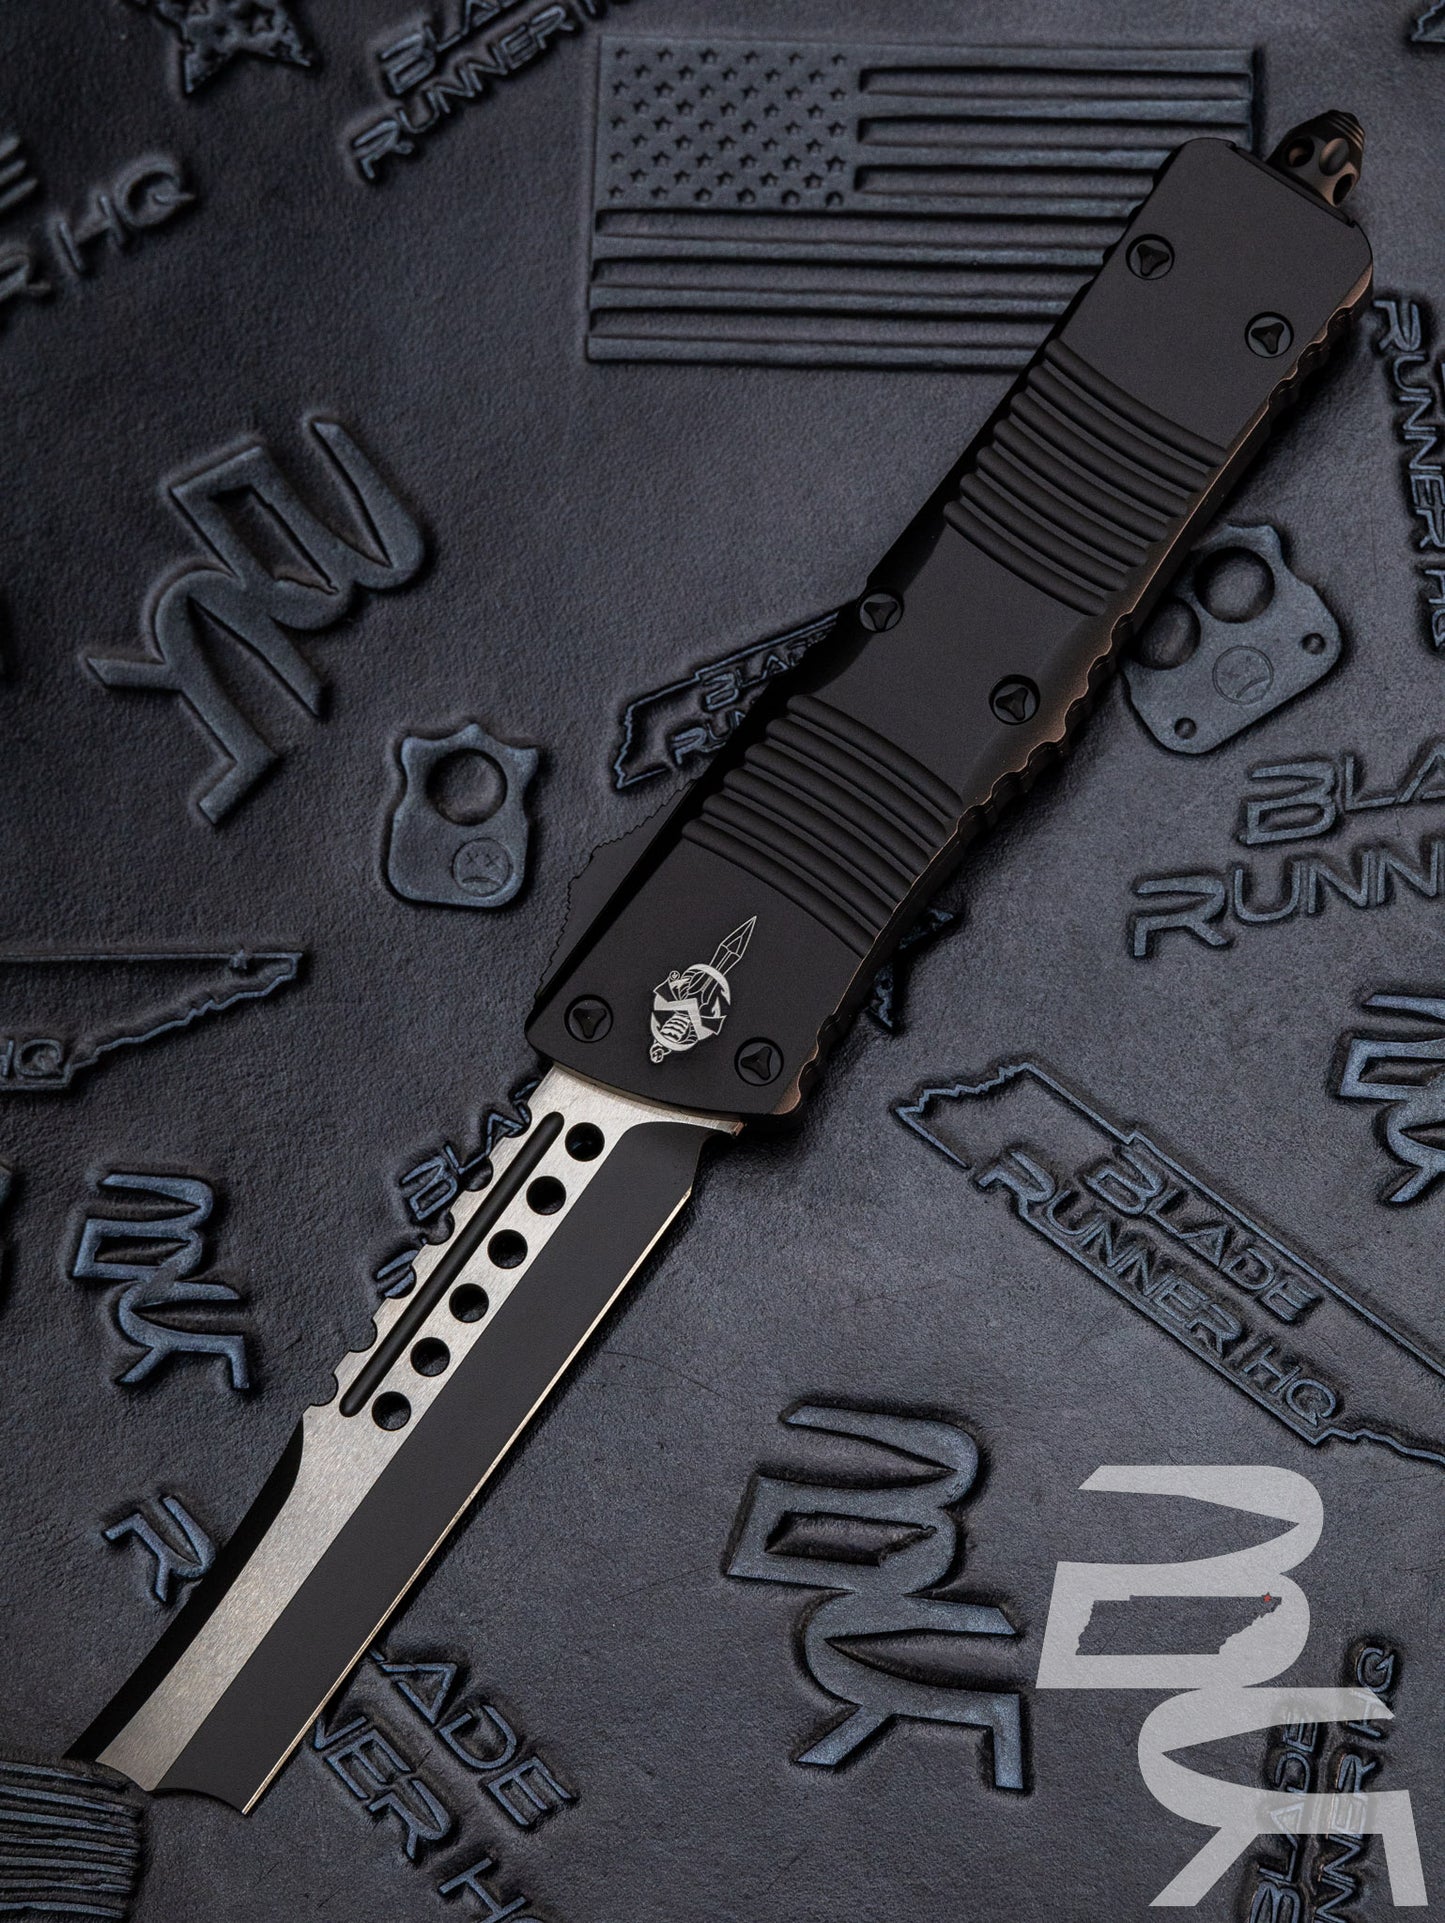 Microtech 219R-1TS Signature Series Combat Troodon Tactical AUTO OTF Knife 3.75" Black Hellhound Razor Blade, Black Aluminum Handles